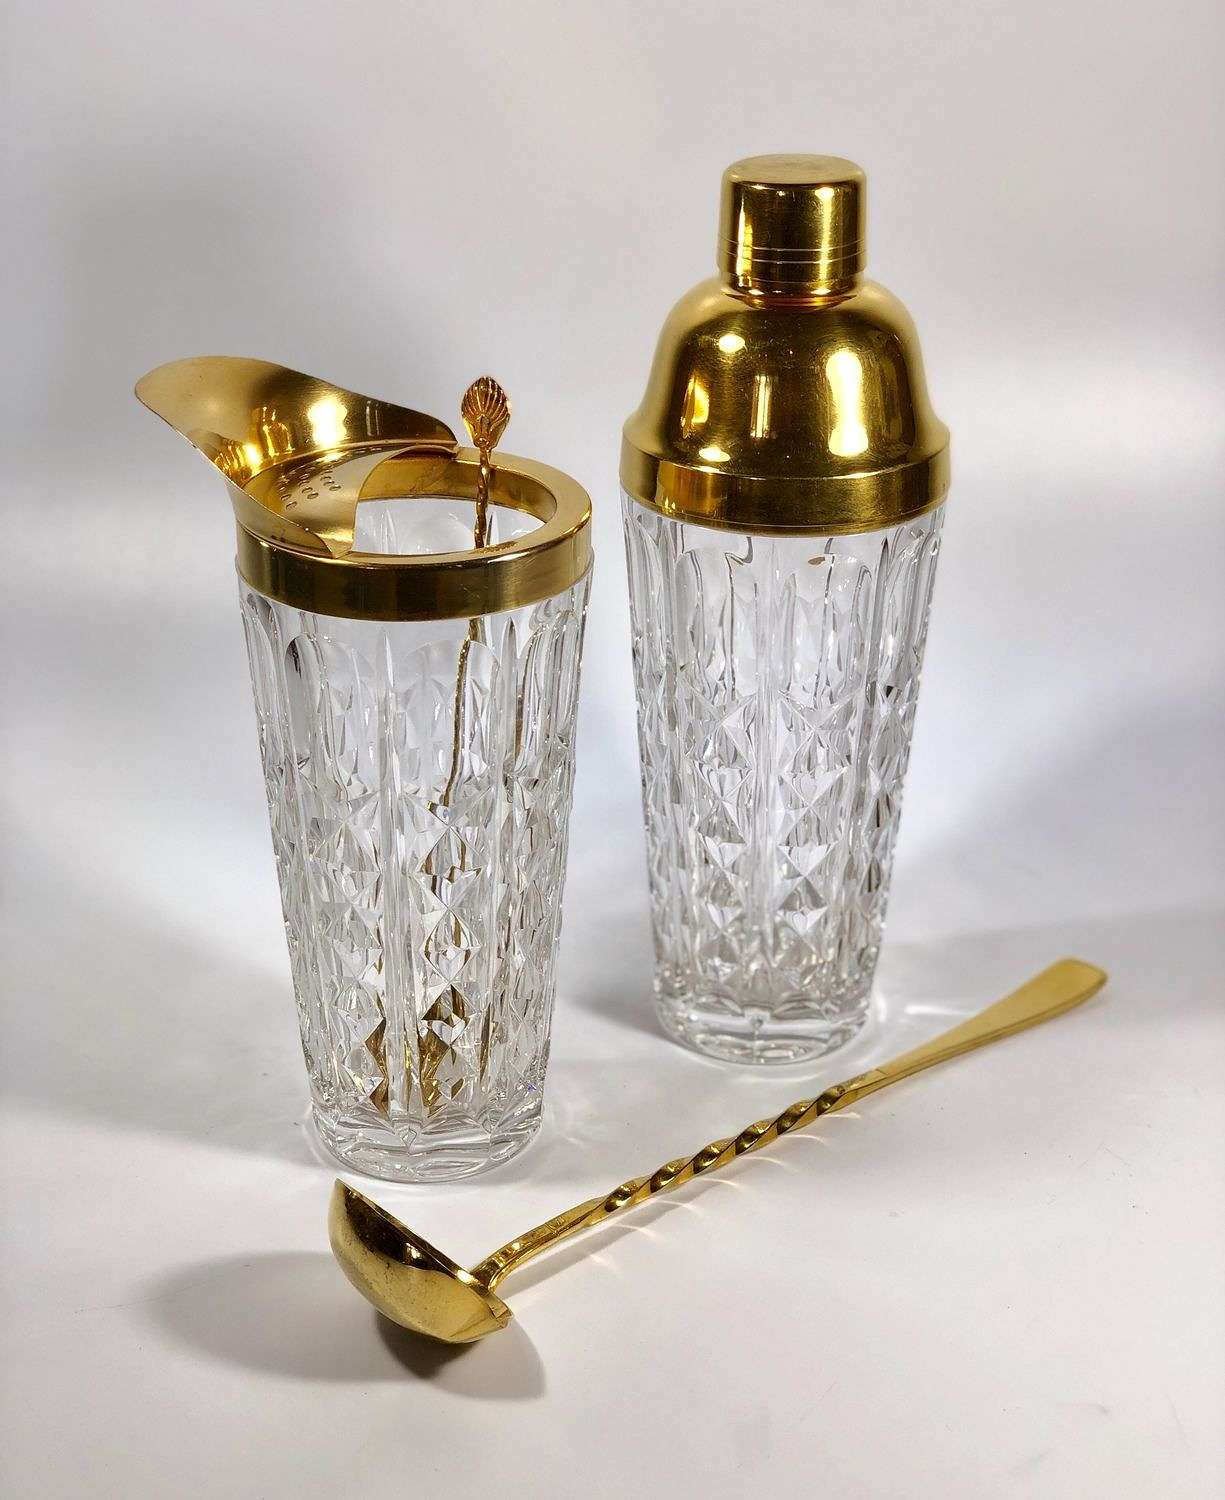 Gold plated Val Saint Lambert cocktail kit